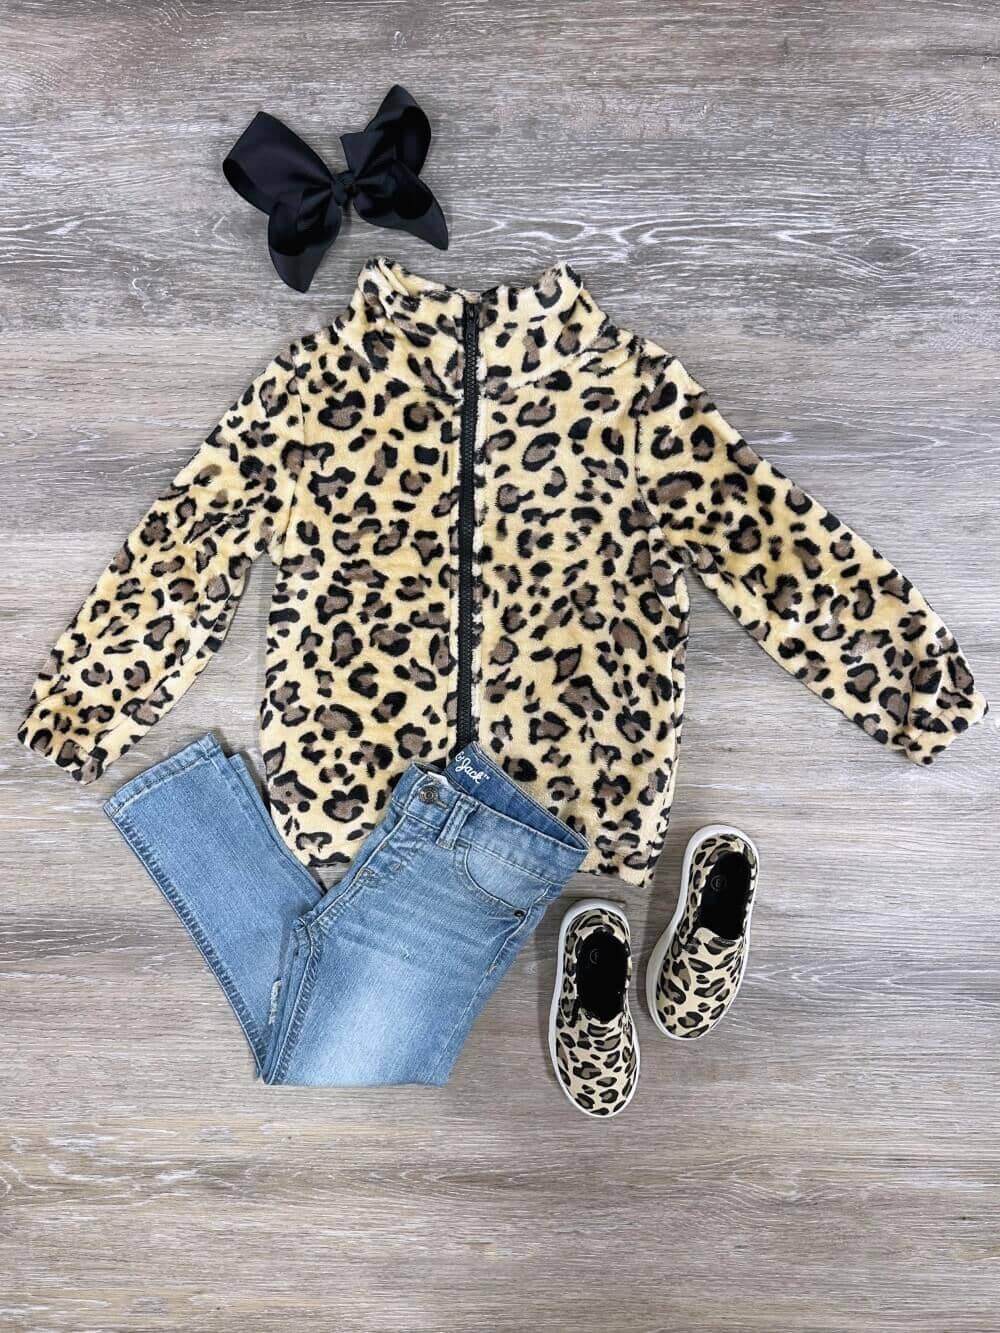 Cheetah Sherpa Zip Up Girls Jacket - Sydney So Sweet